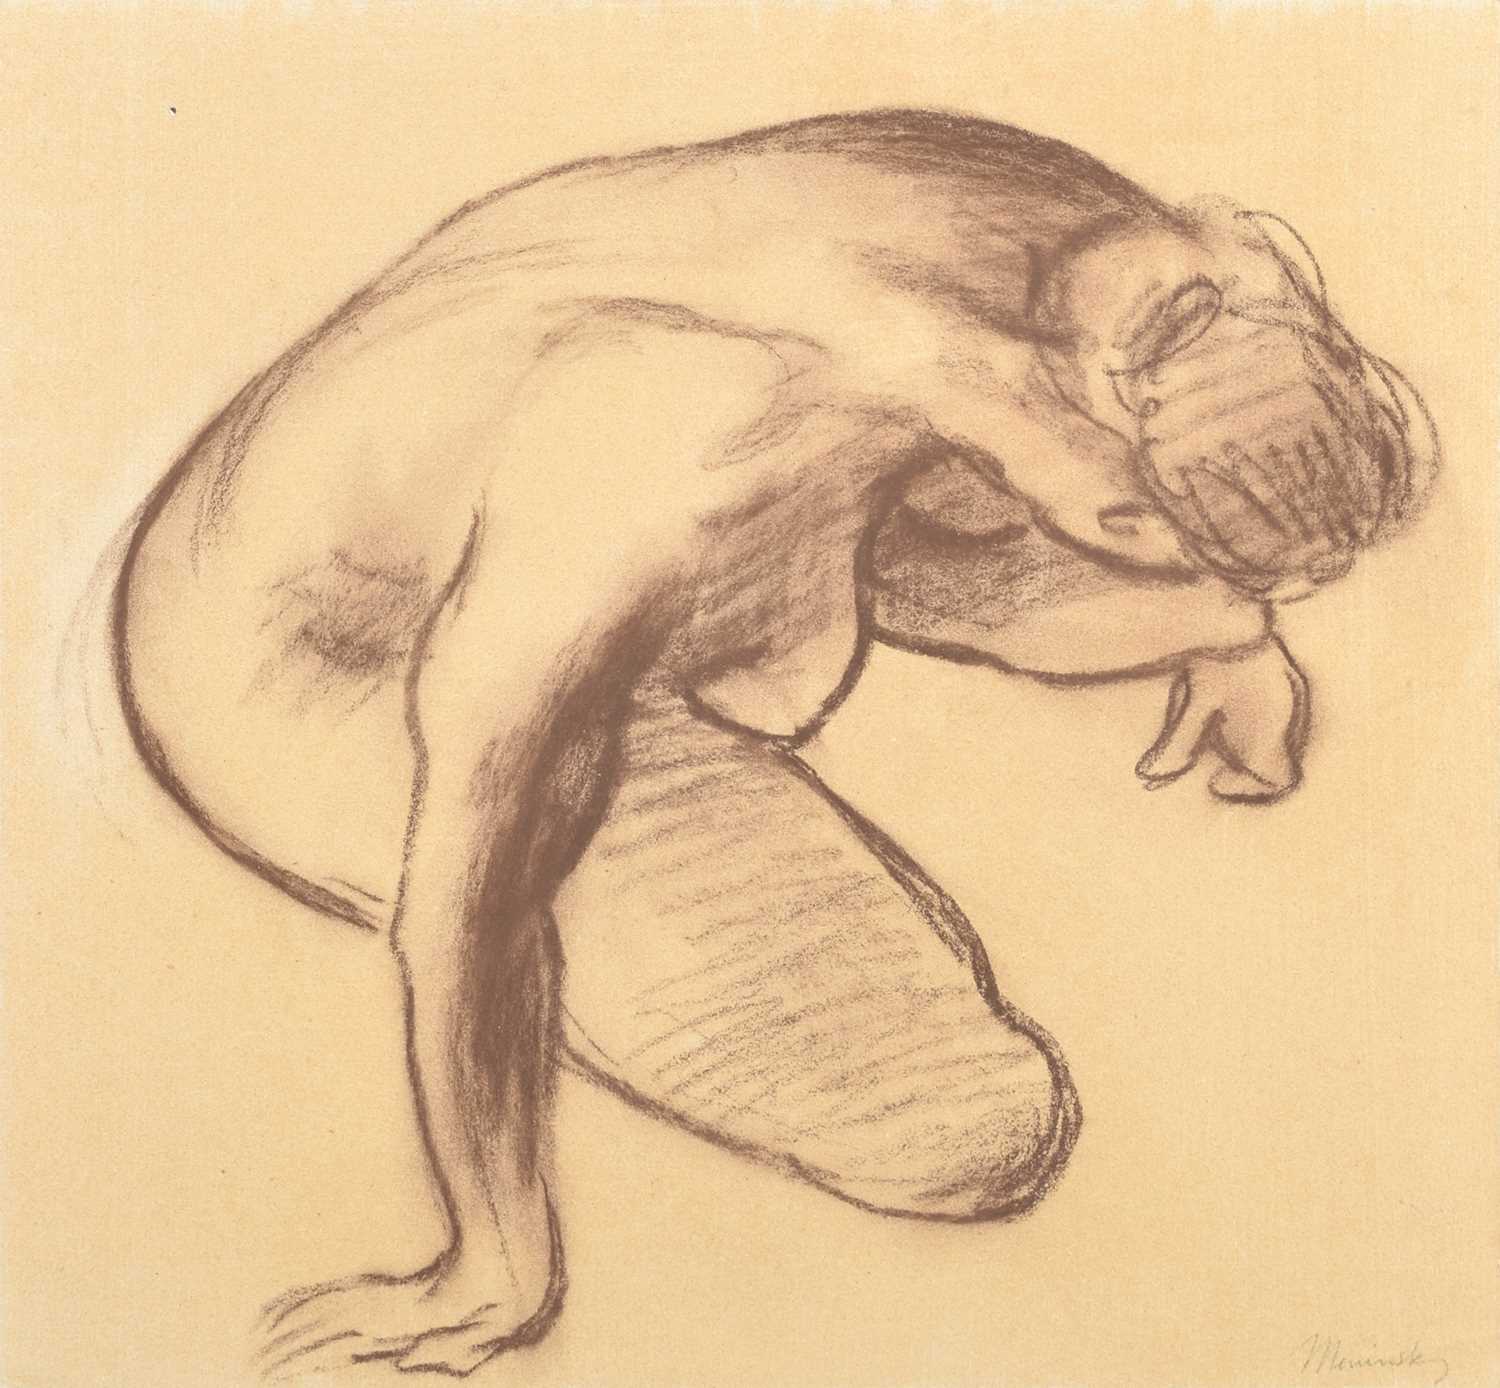 Bernard Meninsky (British 1891-1950) Crouching nude